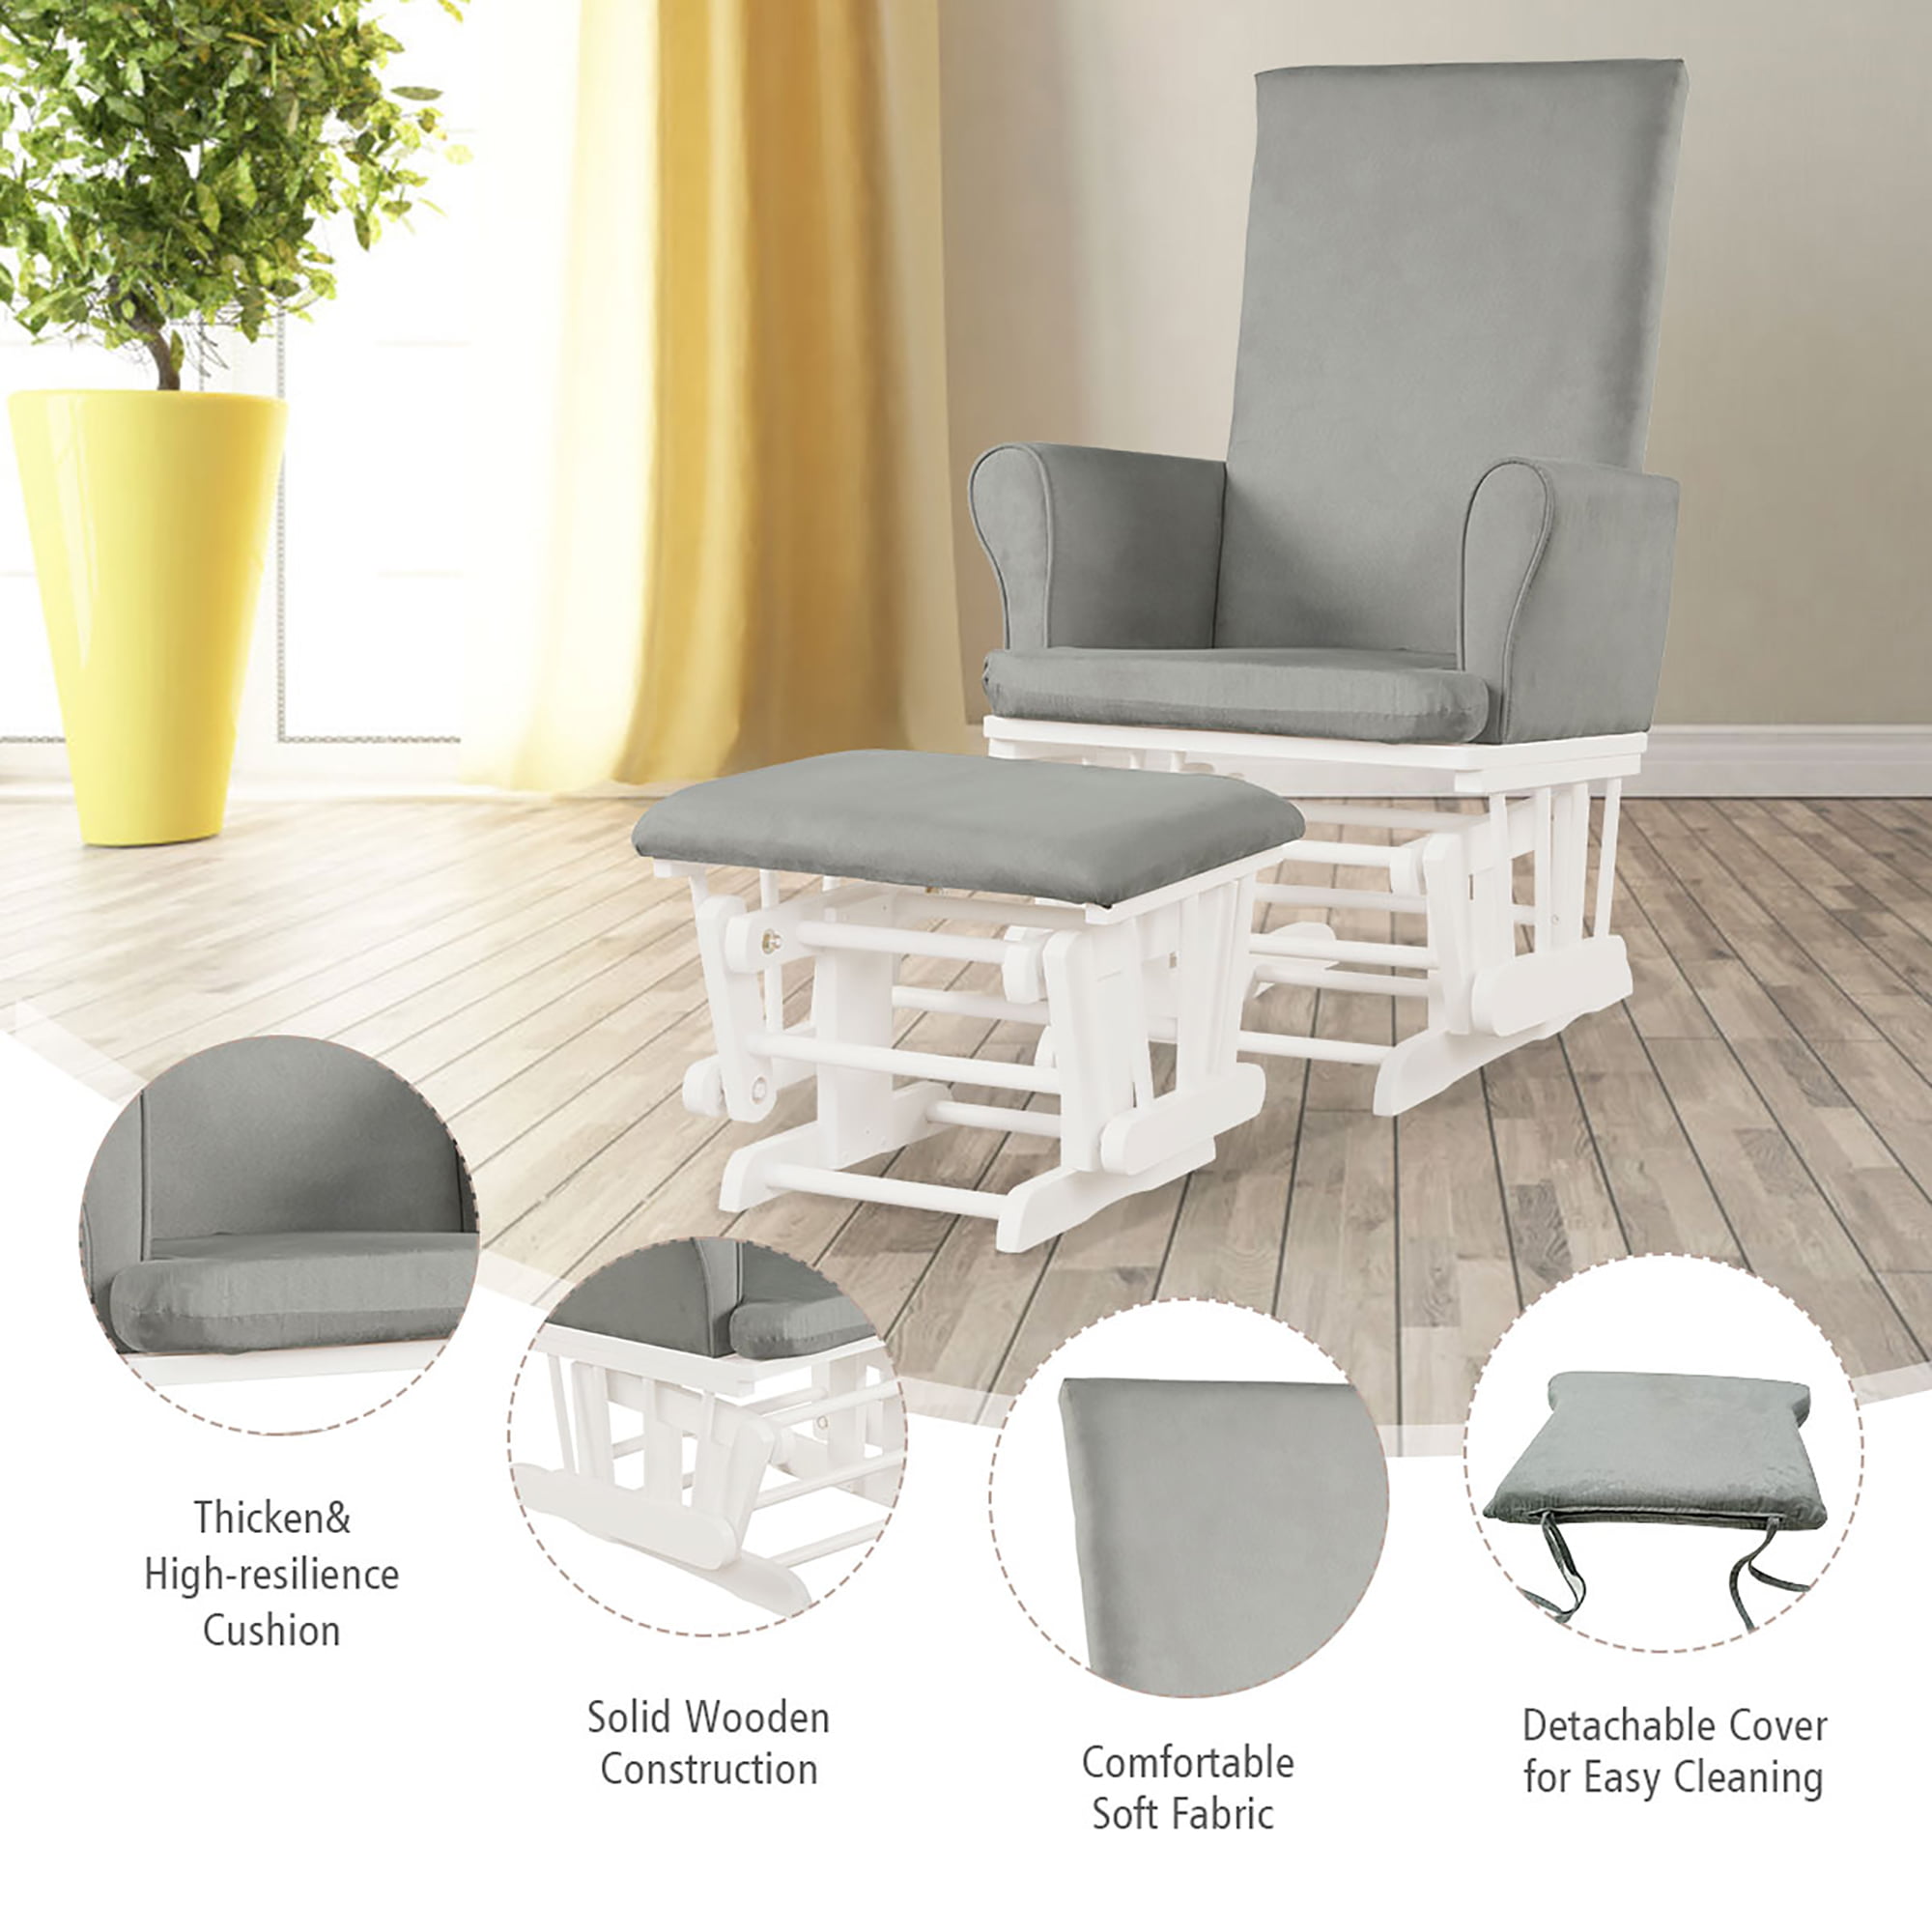 Homestock Espresso/Dark Gray Nursery Glider and Ottoman Set with Cushion, Rocker Rocking Chair for Breastfeeding, Maternity